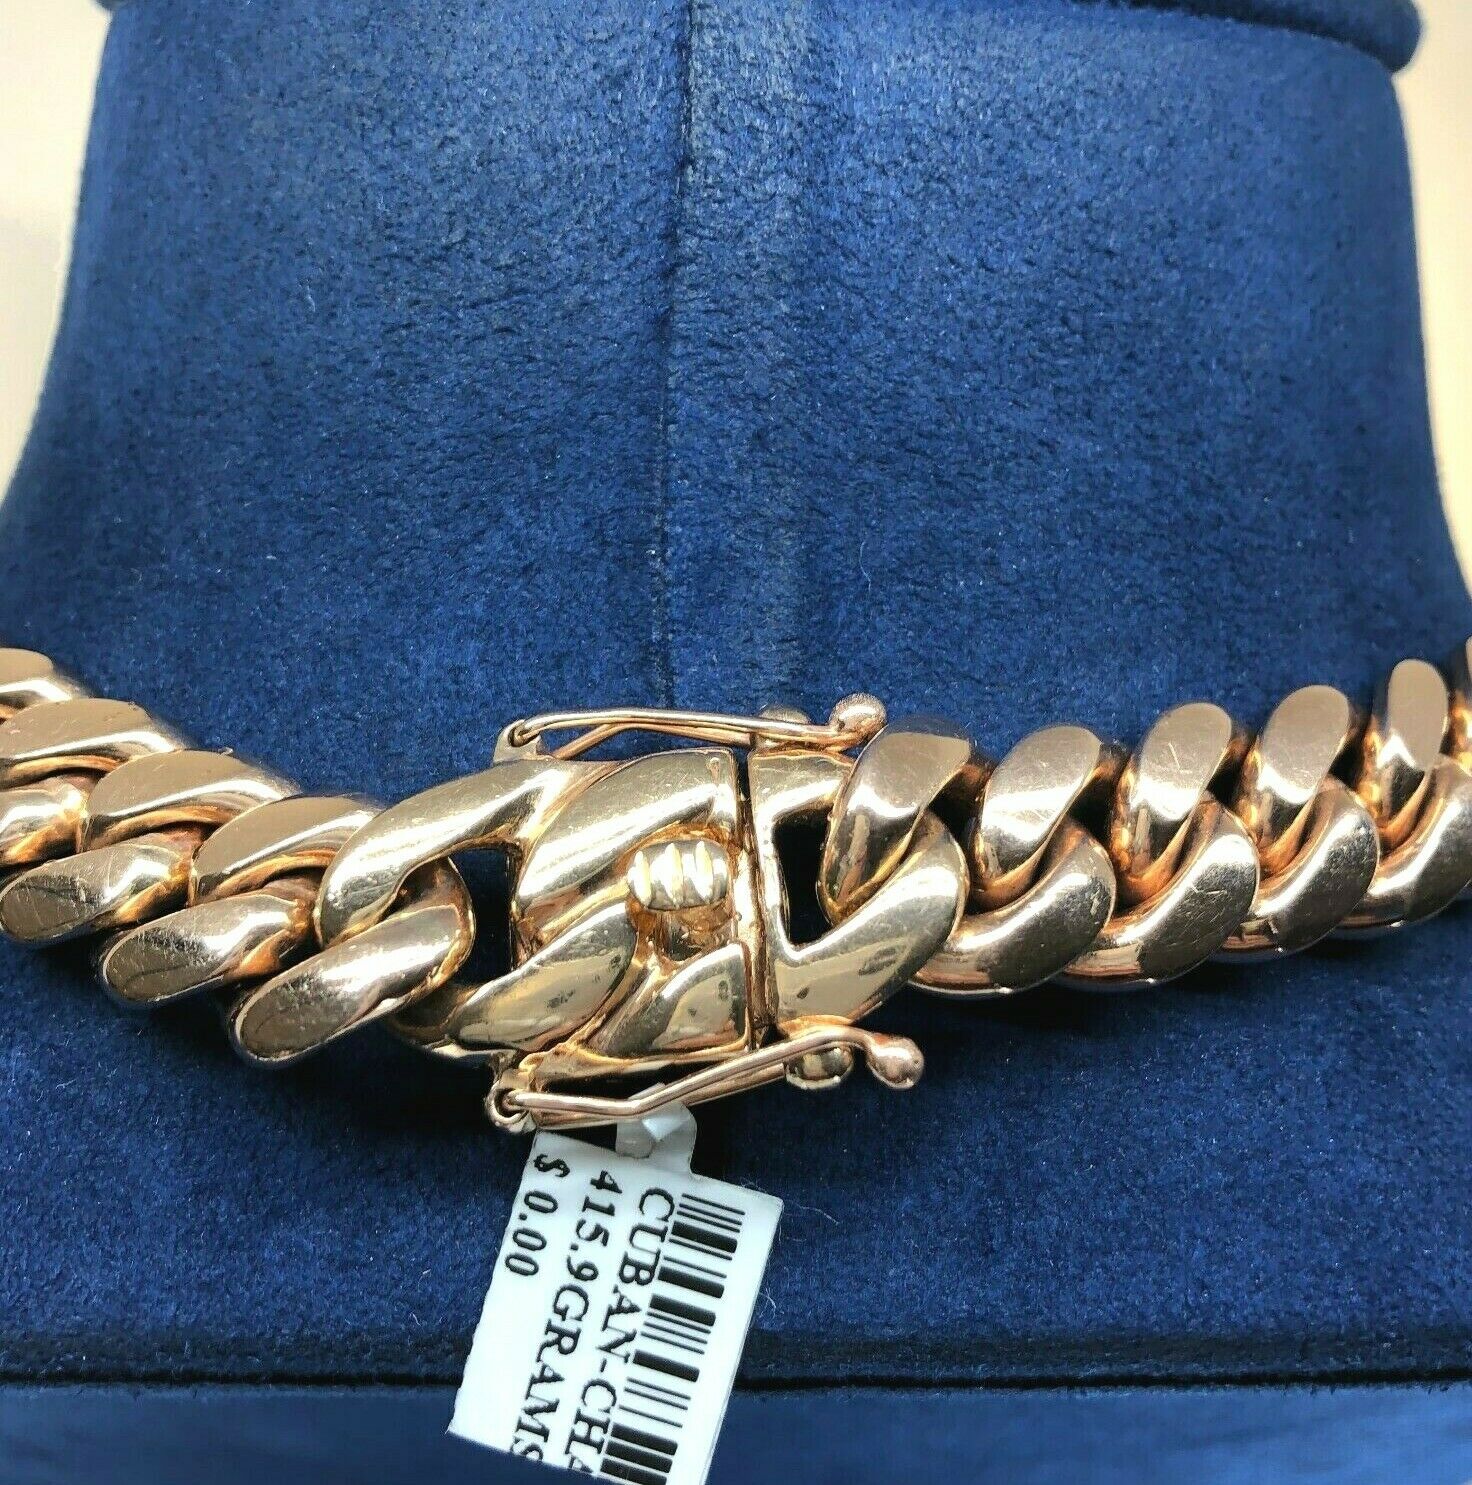 Men's Solid 14 Karat Rose Gold Cuban Link Necklace Chain 416 Grams - 14mm